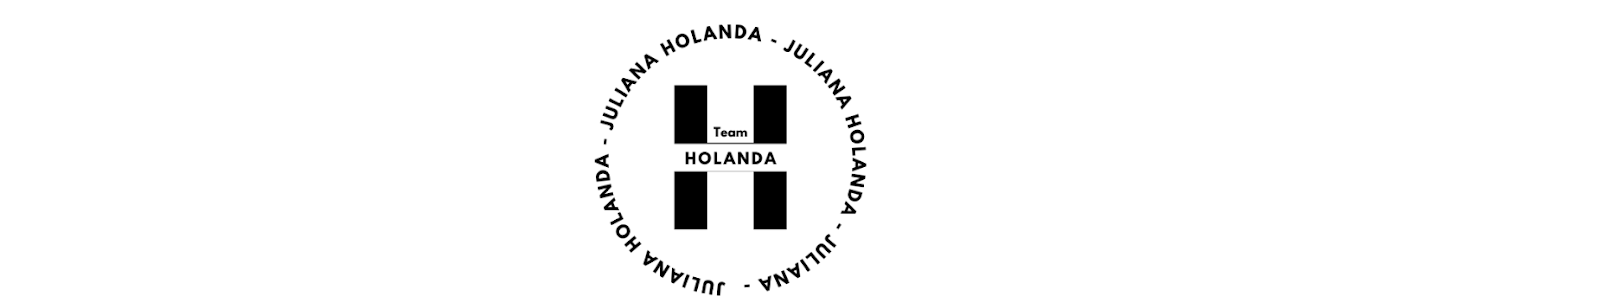 Juliana Holanda - Consultoria Esportiva Online